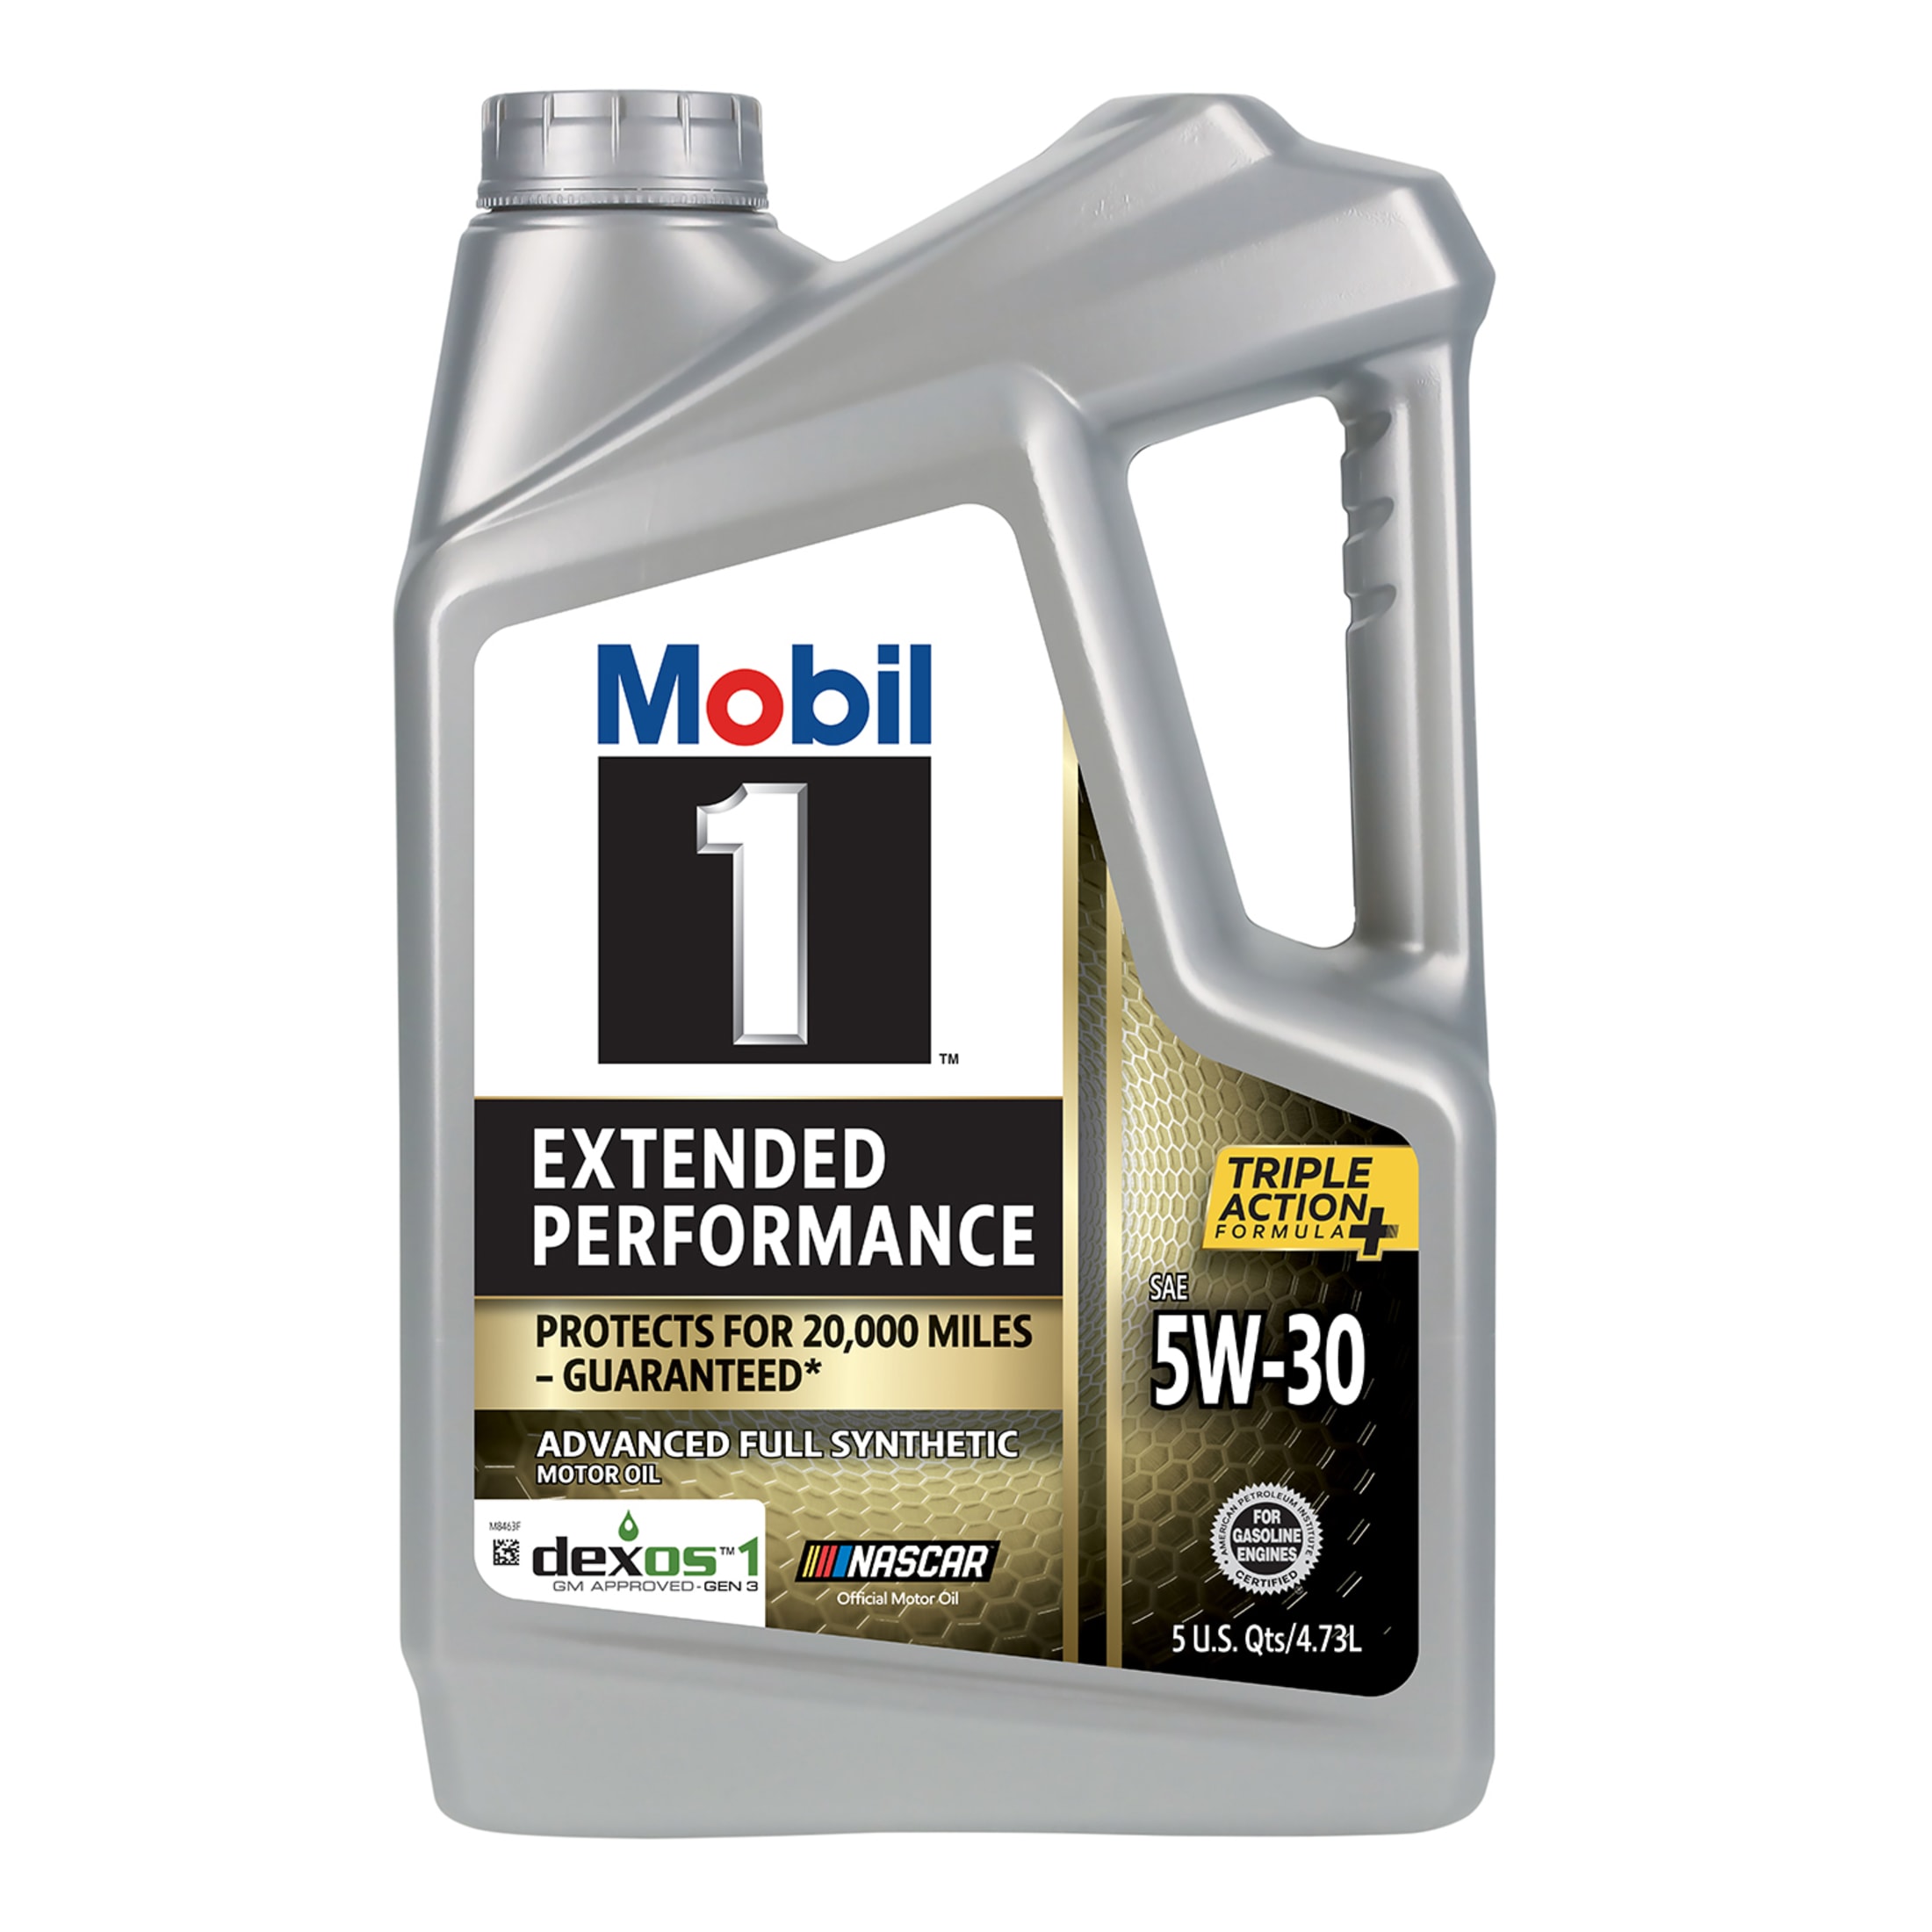 Mobil 1 Extended Performance Full Synthetic Motor Oil 5W-30, 5 Quart - image 1 of 9